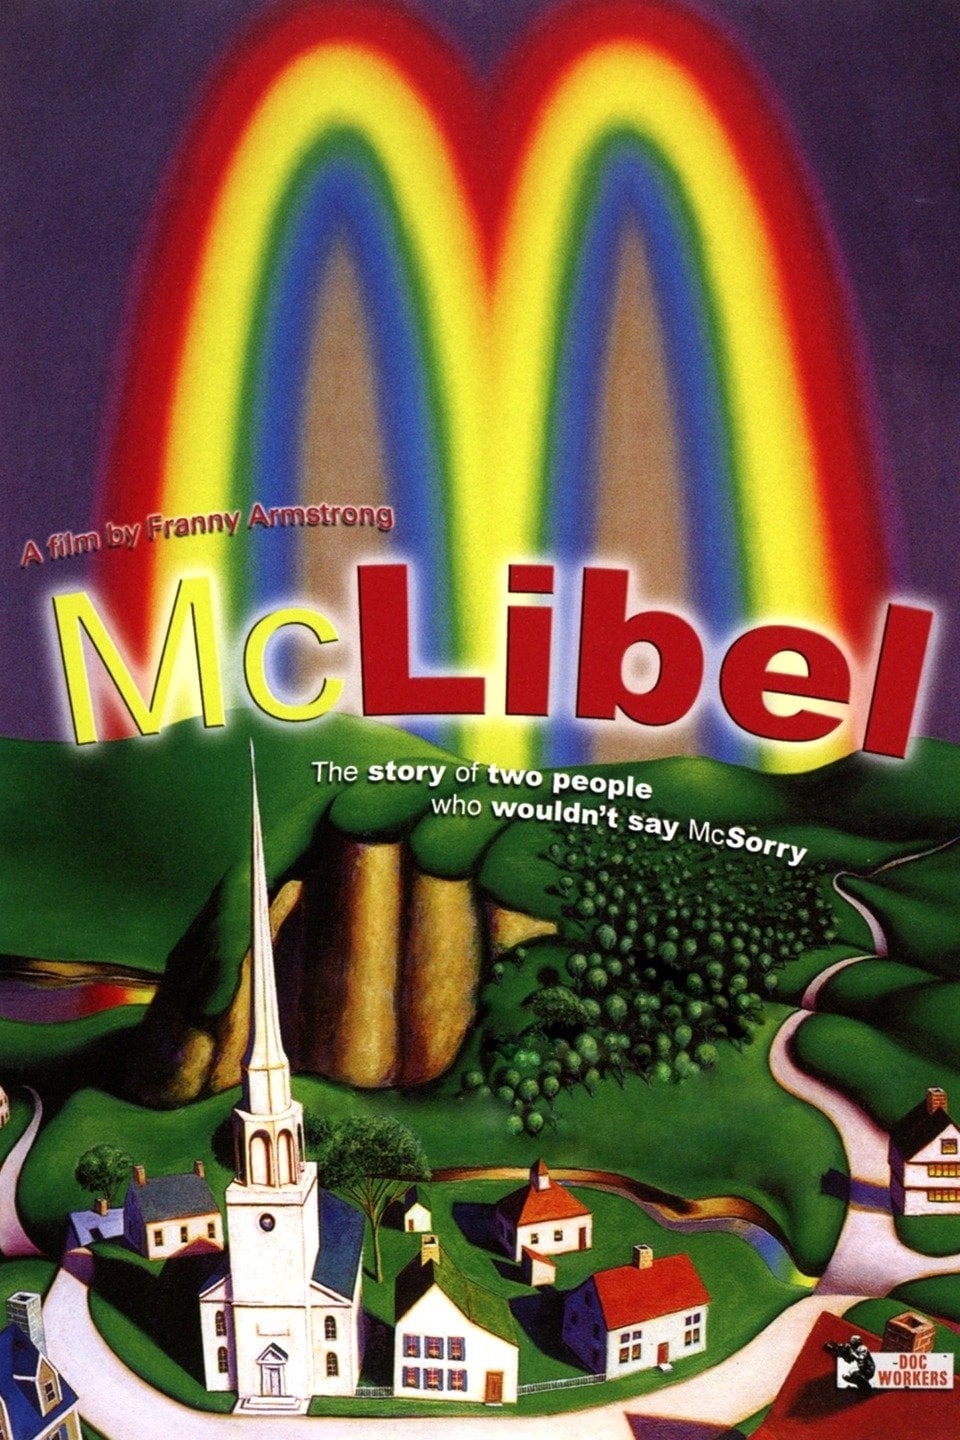 McLibel (2005)